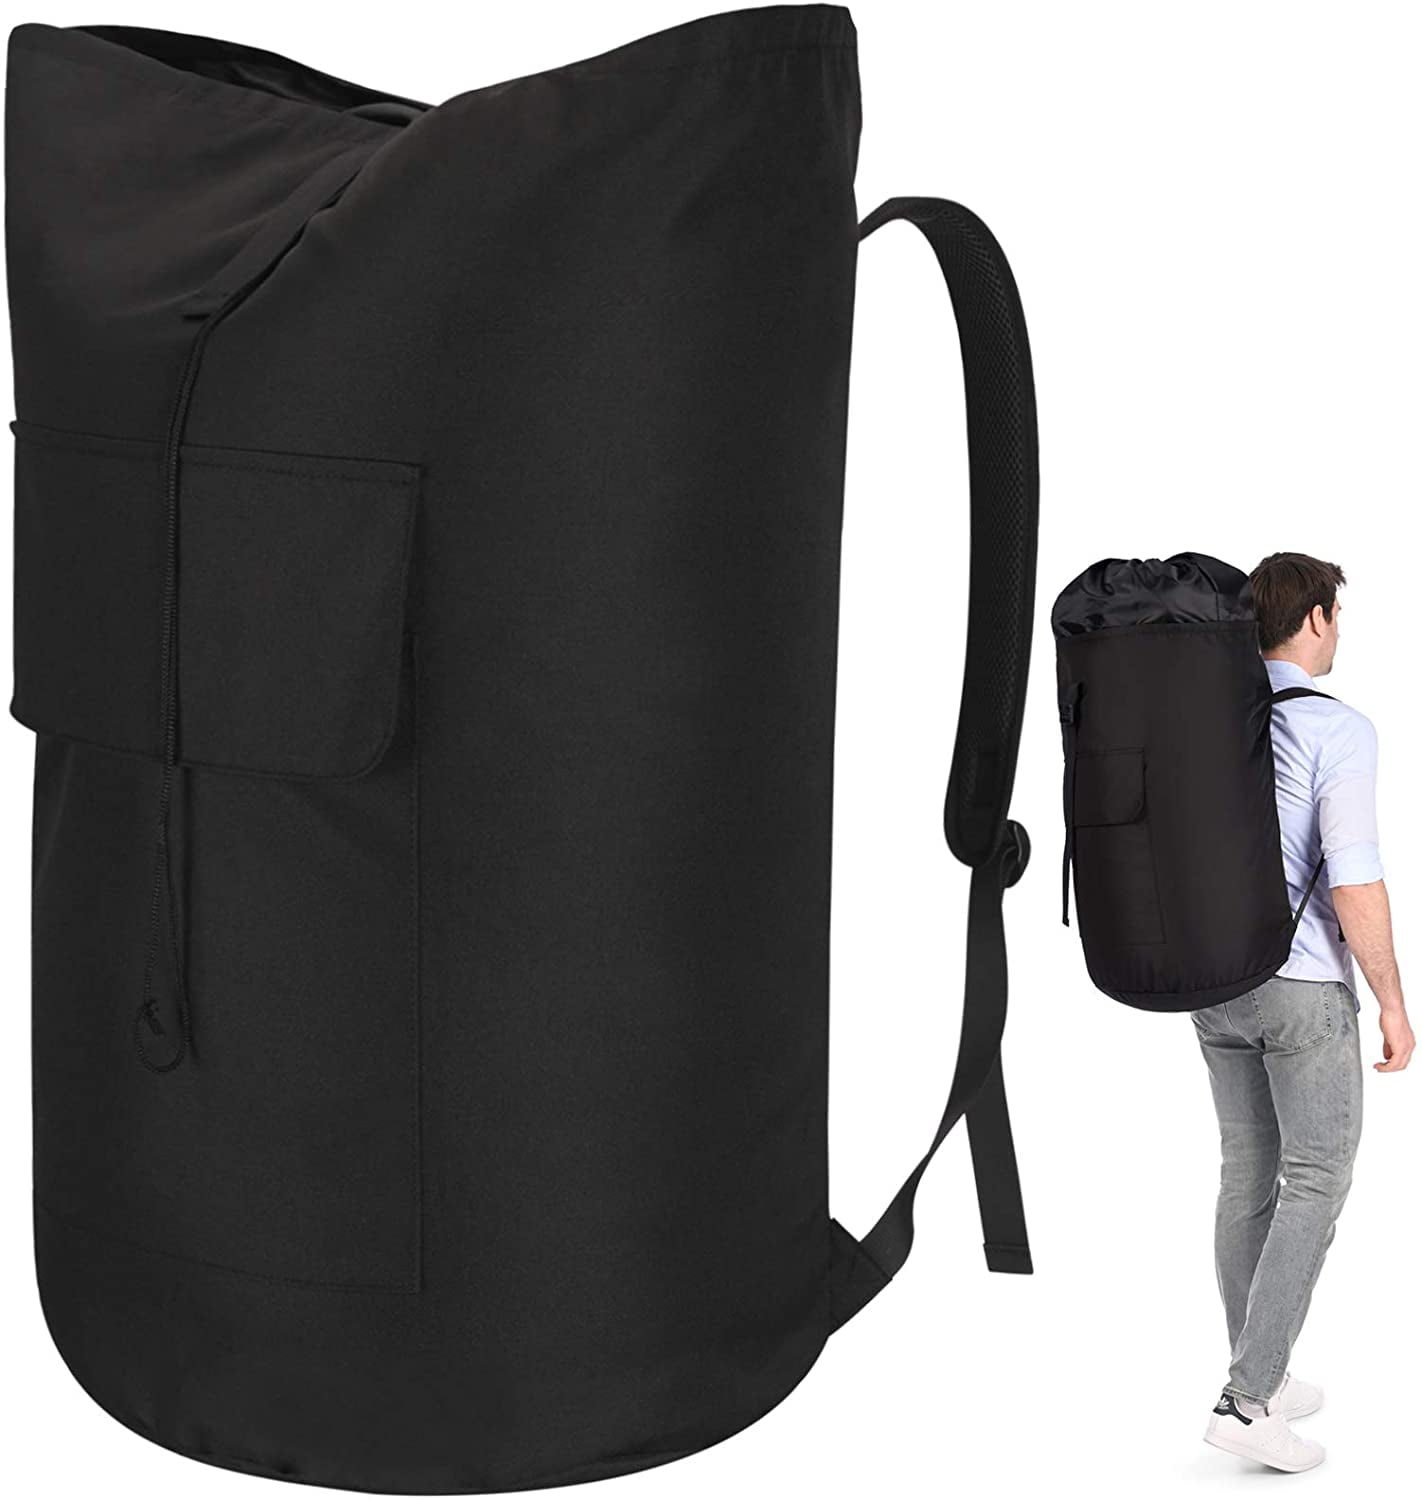 Laundry Bag Backpack with Shoulder Straps and Mesh Pocket Clothes Hamper  Bag with Drawstring Closure…See more Laundry Bag Backpack with Shoulder